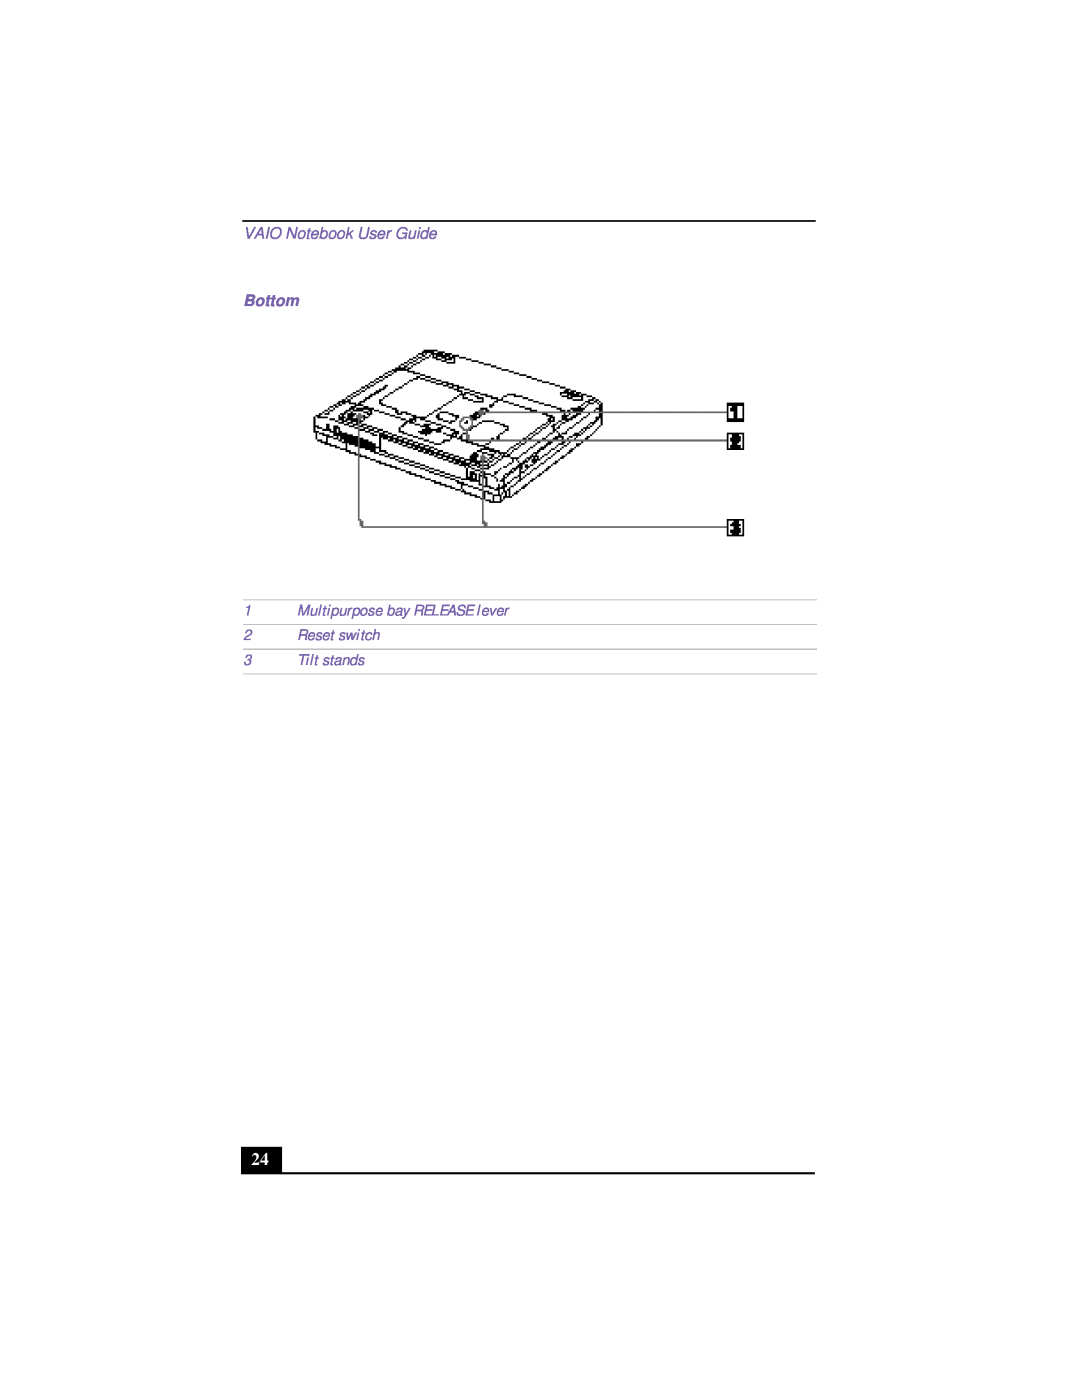 Sony PCG-FX120K, PCG-FX150 VAIO Notebook User Guide, Bottom 1 Multipurpose bay RELEASE lever 2 Reset switch 3 Tilt stands 